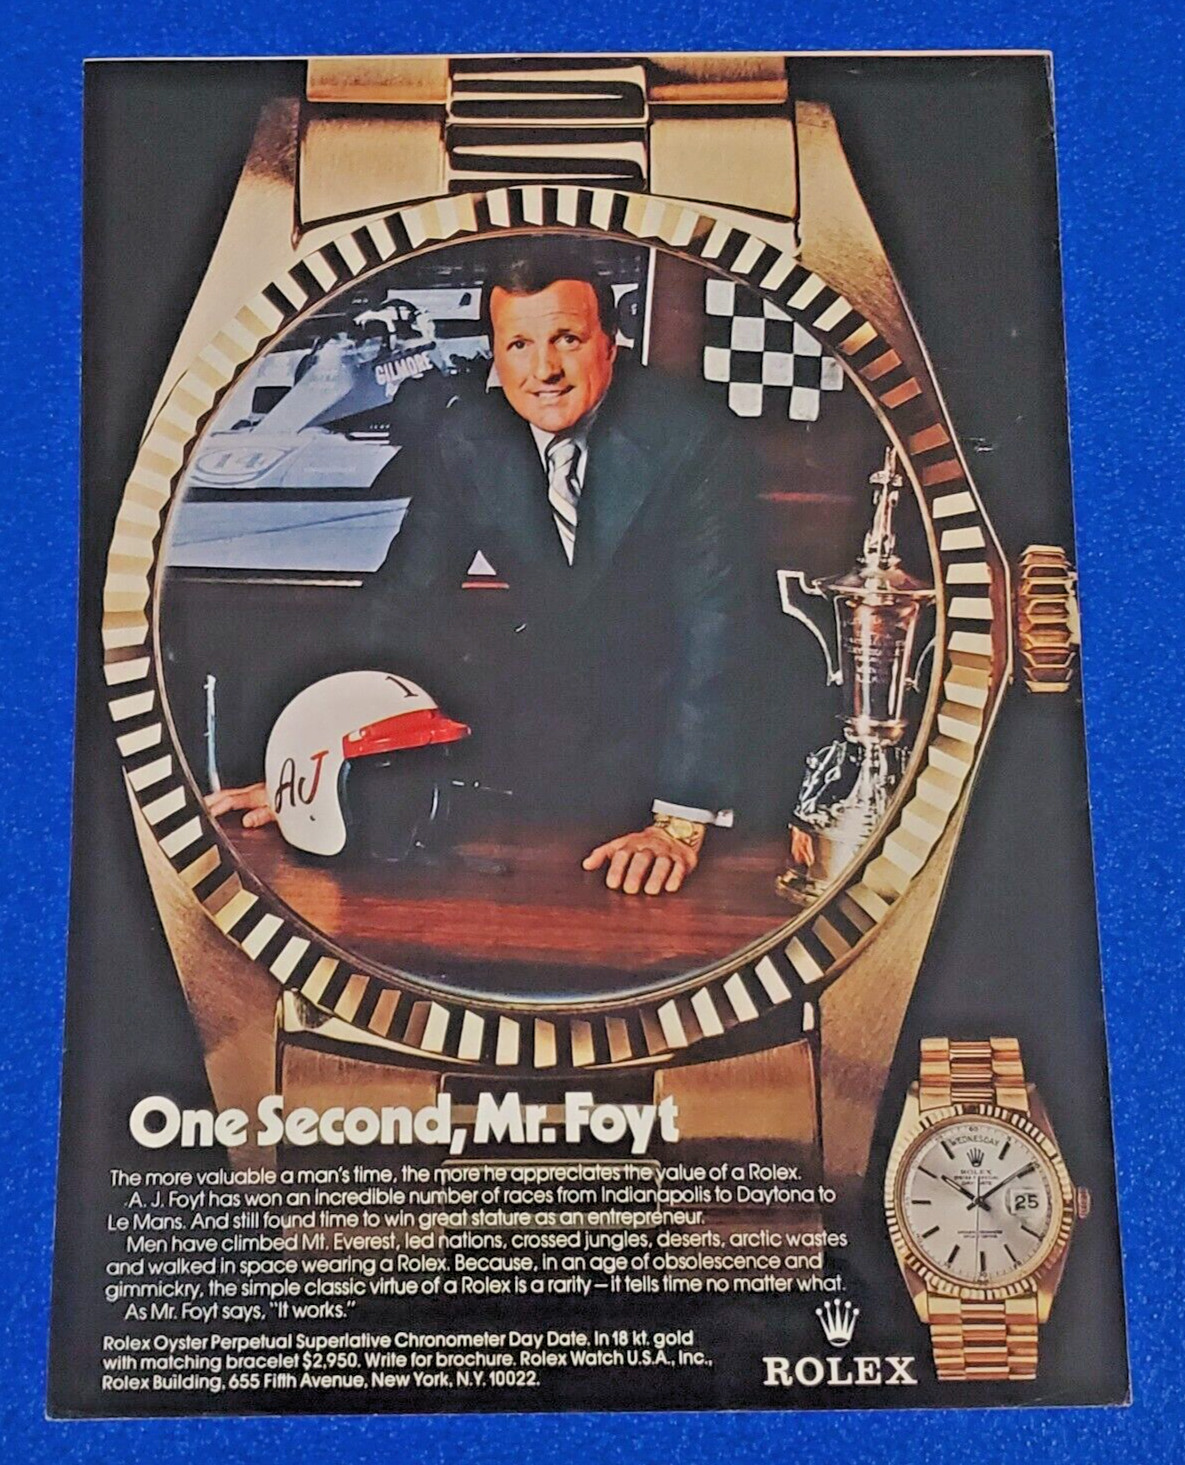 1974 ROLEX OYSTER PERPETUAL SUPERLATIVE CHRONOMETER DAY DATE AJ FOYT PRINT AD